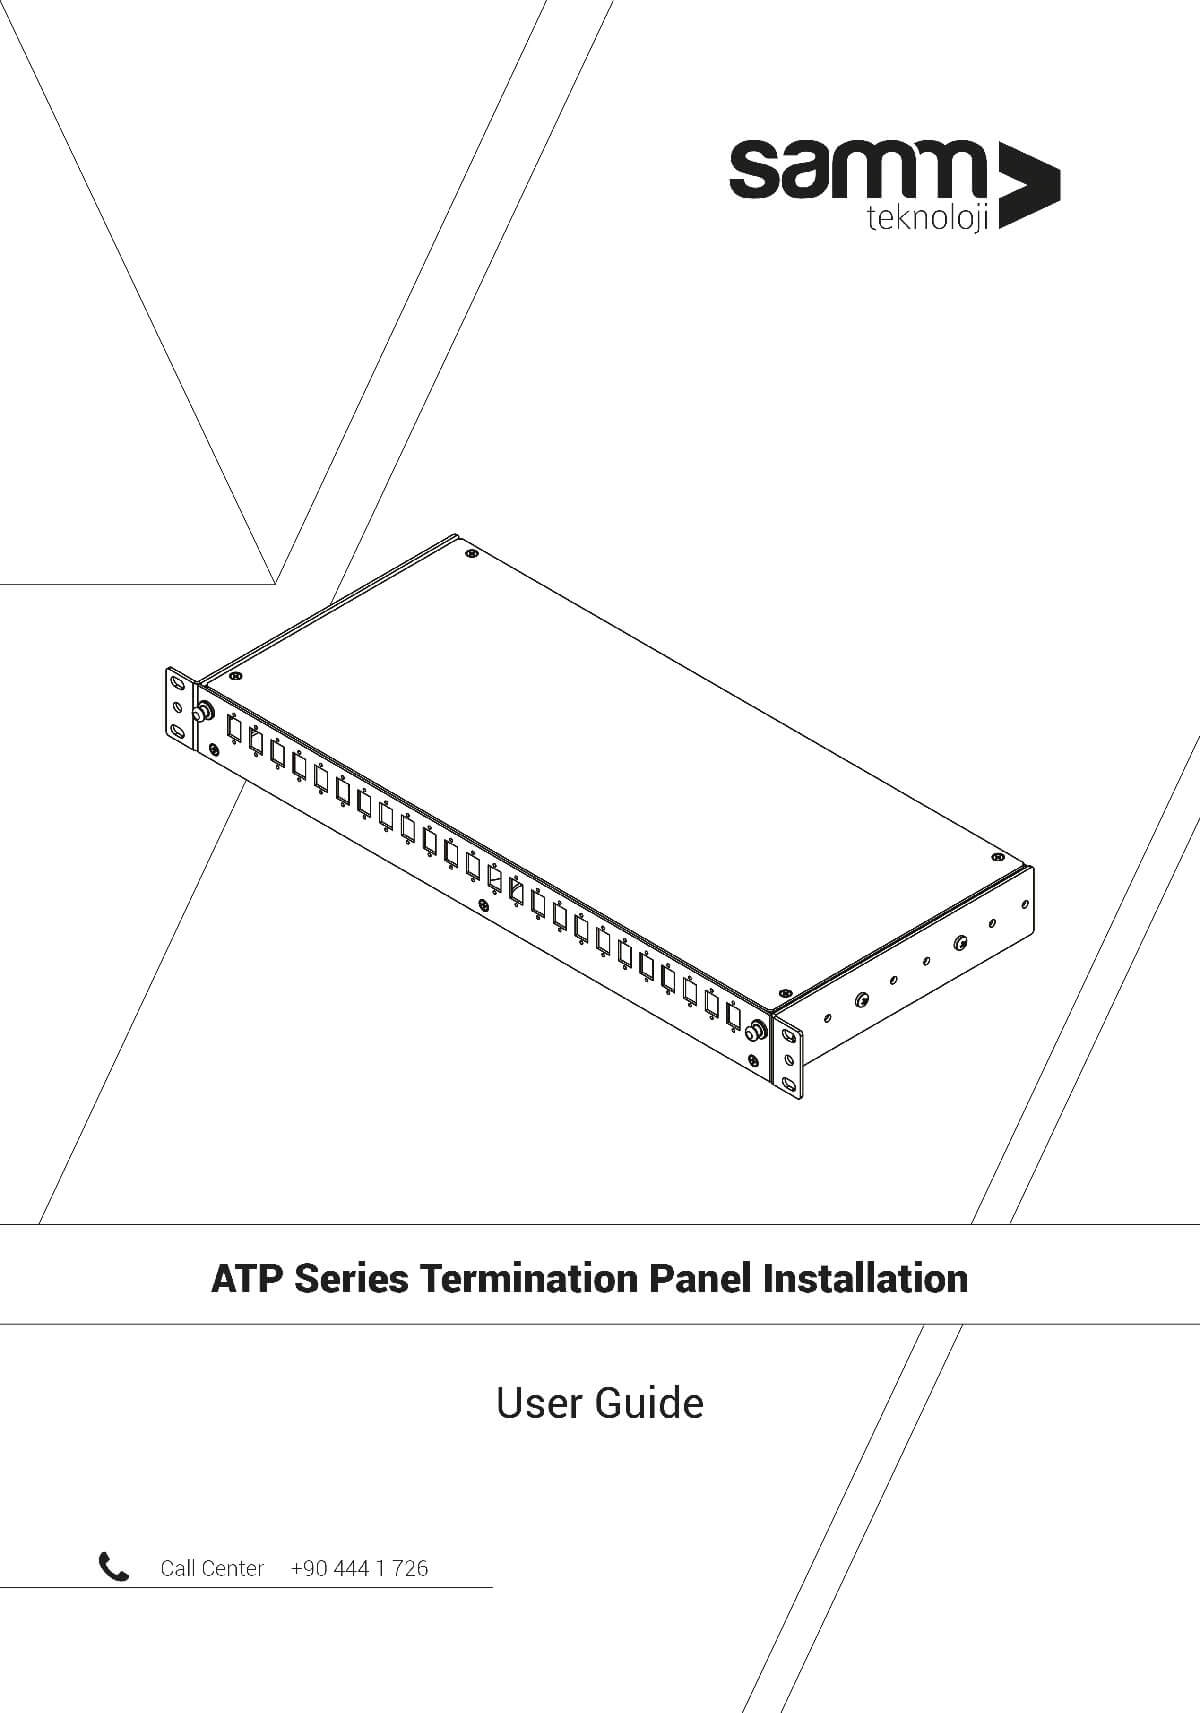 Aluminiu fiber Termination Panel Installation Guide